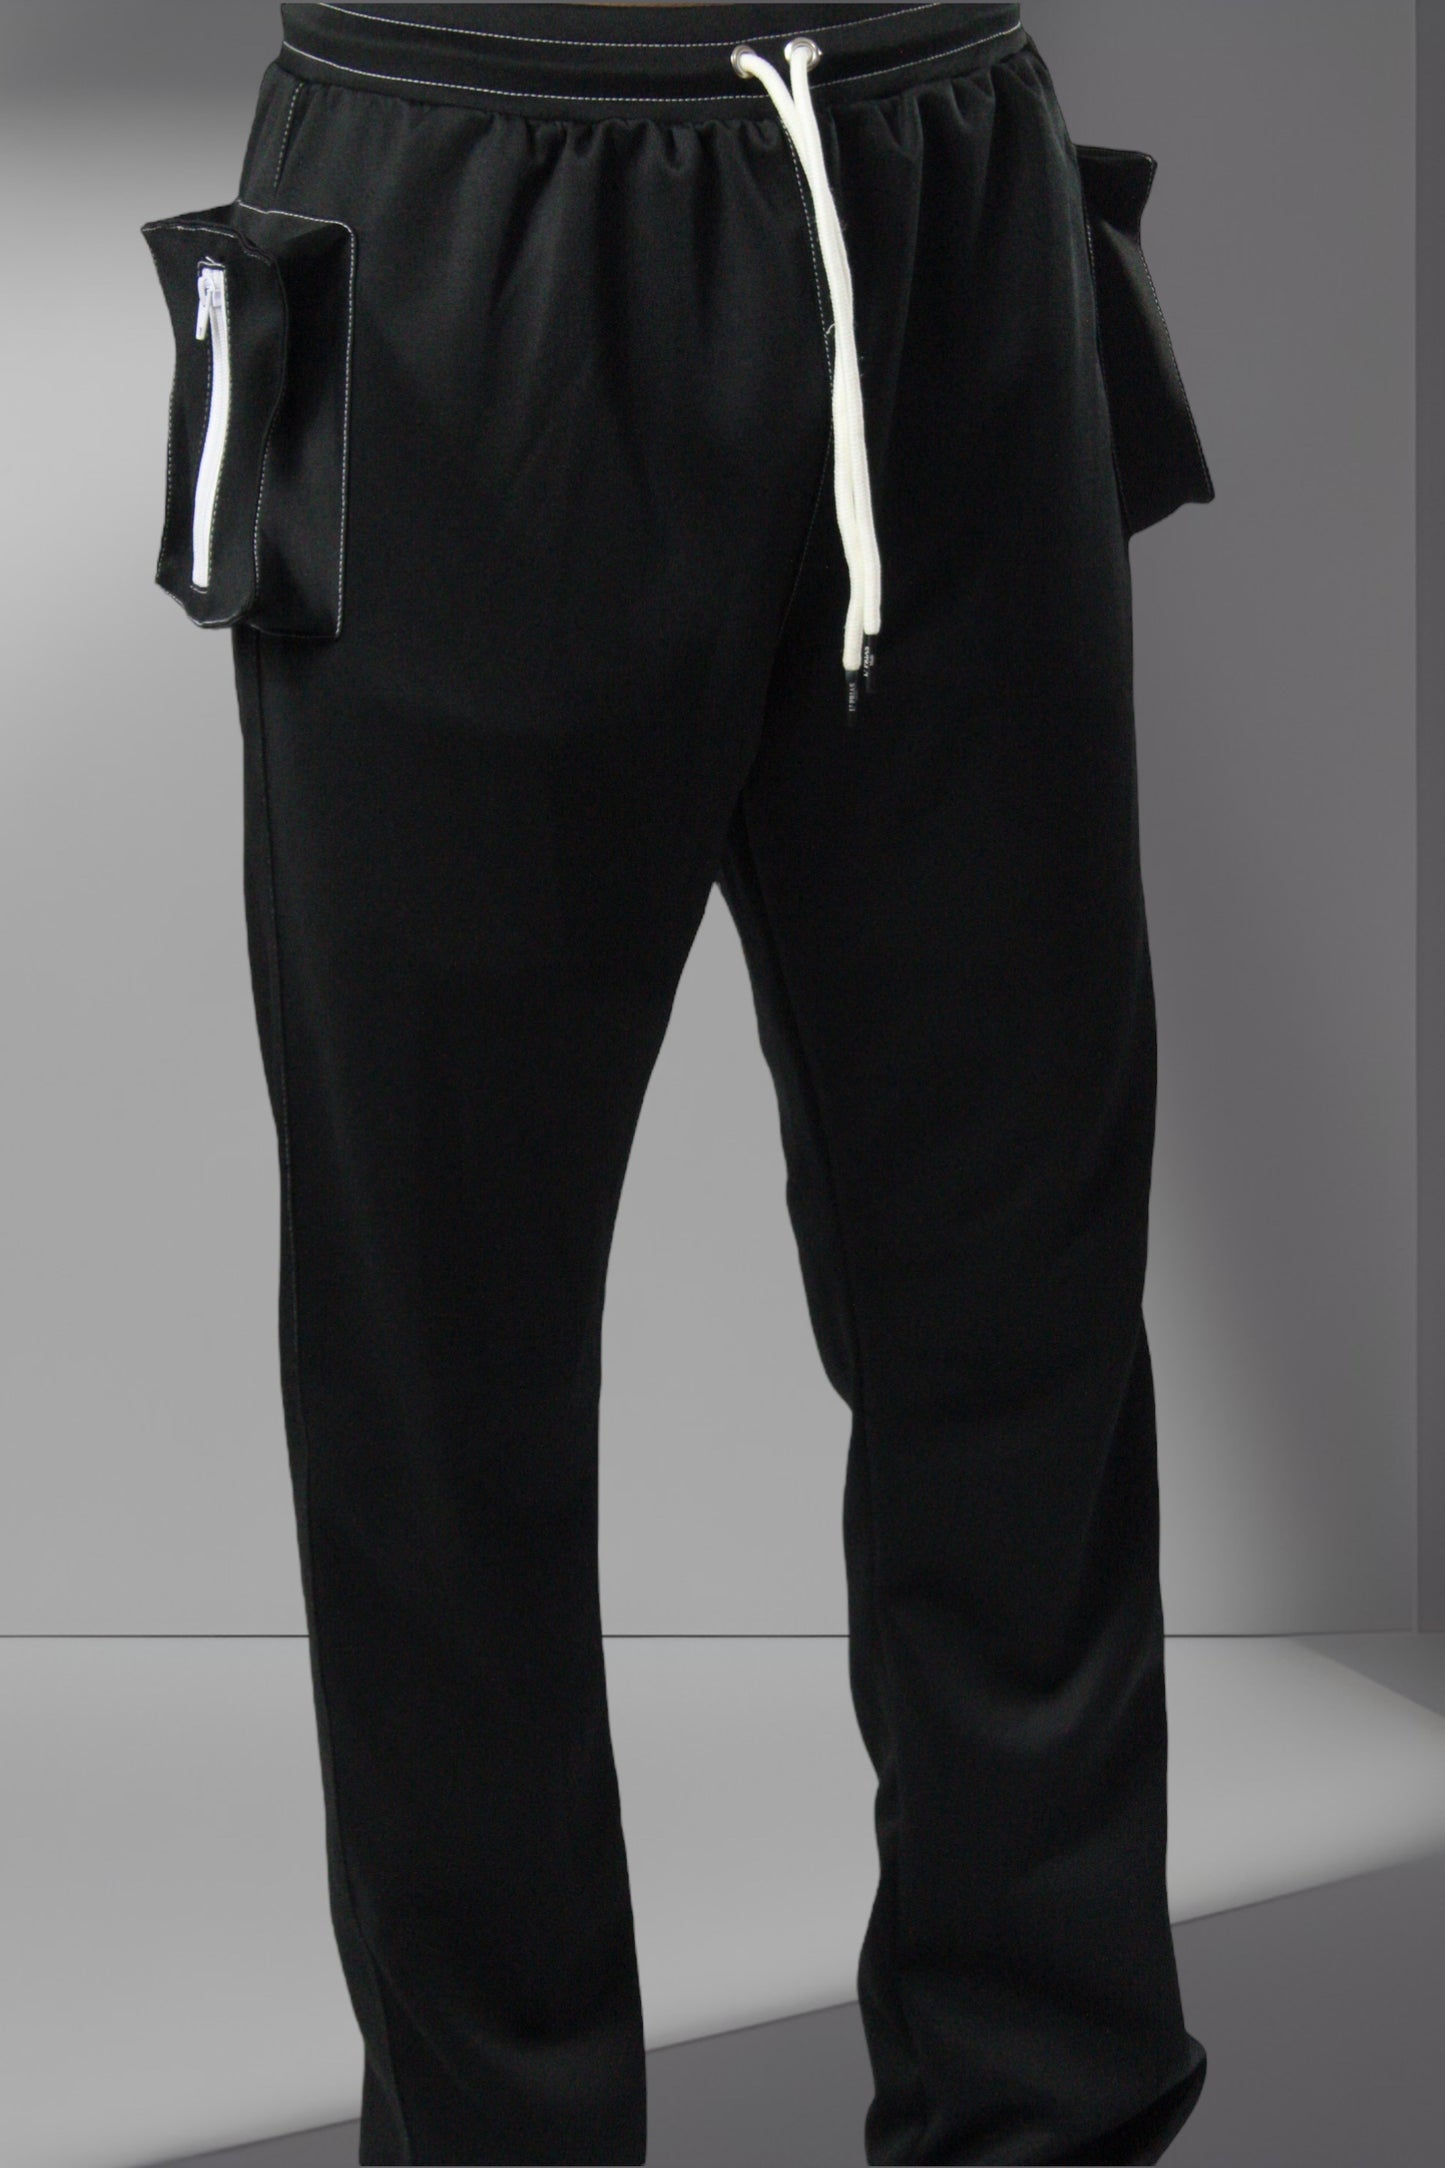 Black Survival Pant - Ideal for Men & Women - Polyester